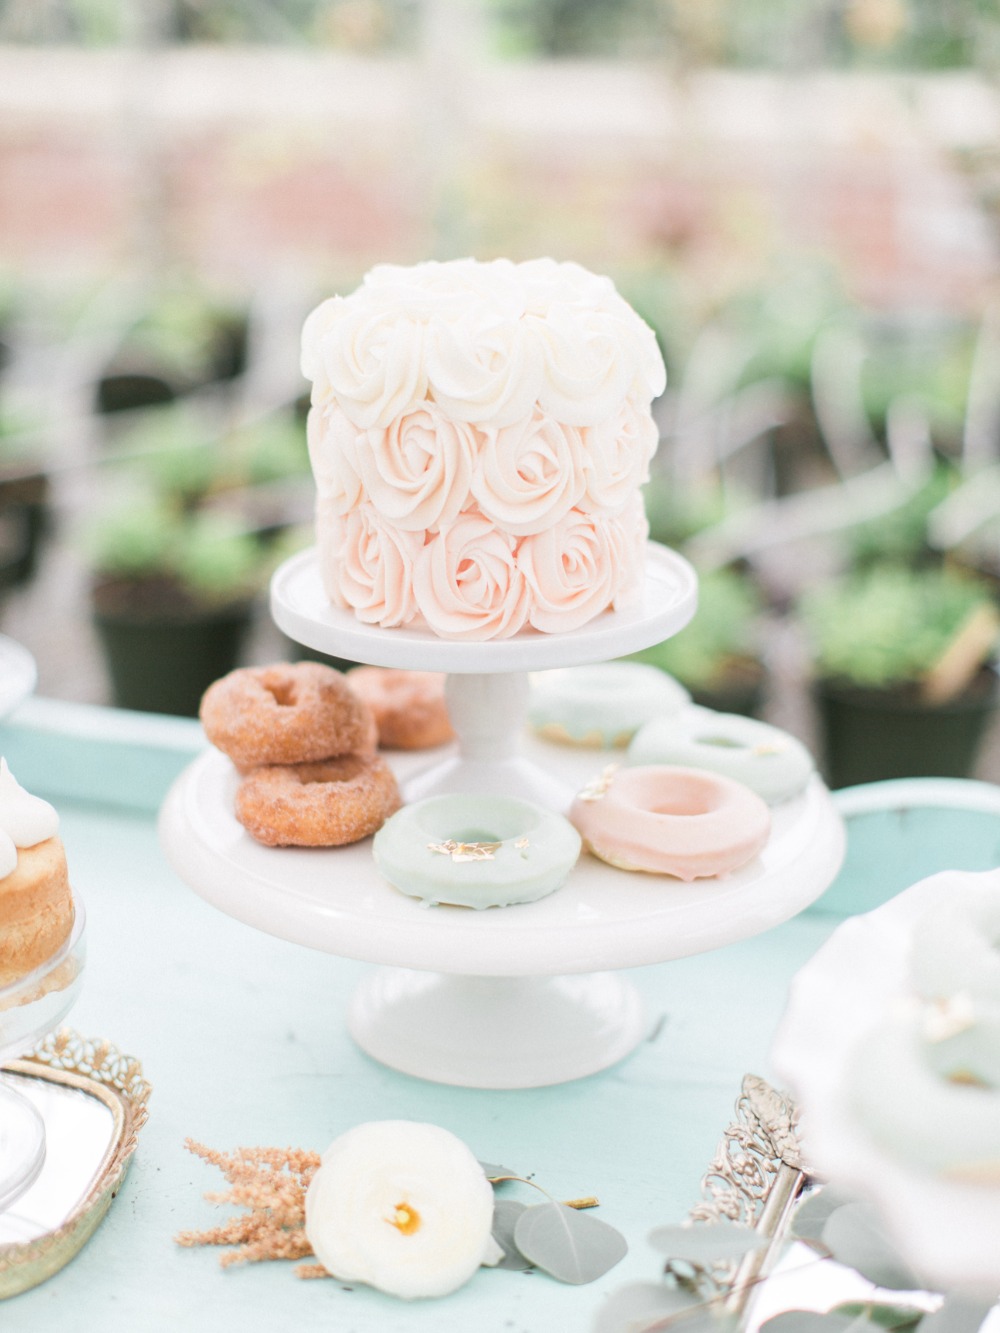 Mini wedding cake with rose icing